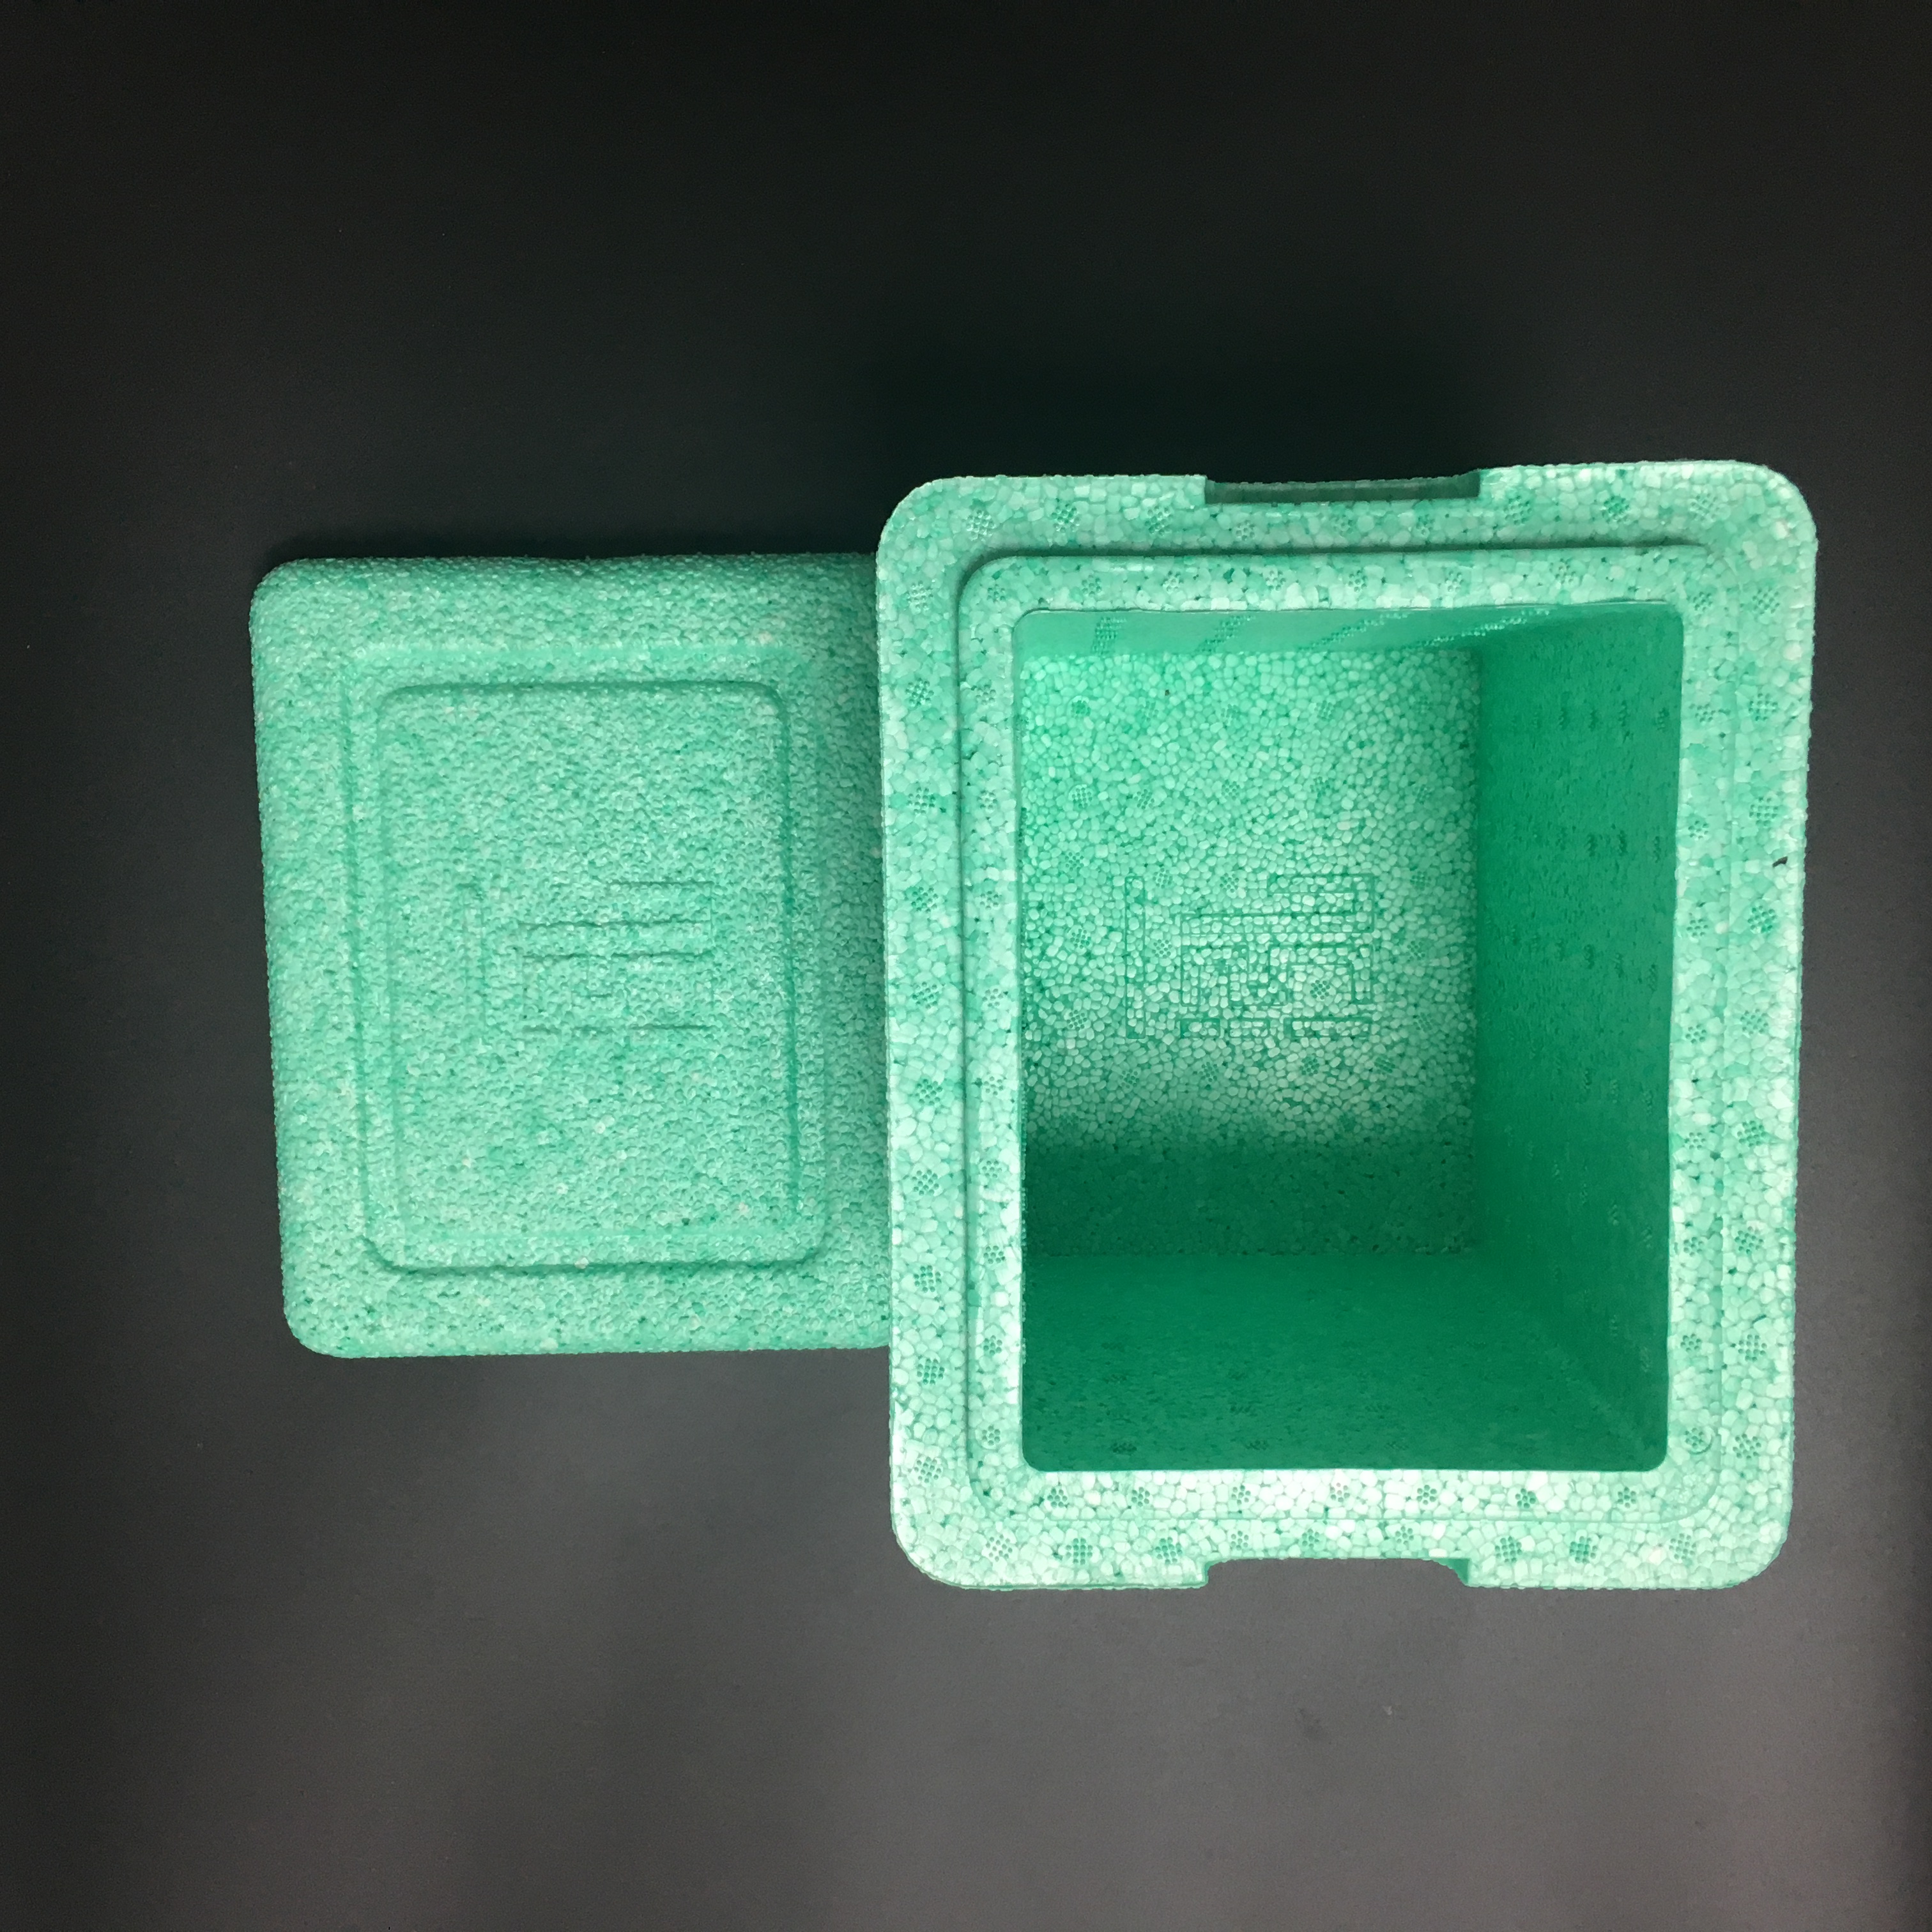 EPP foam box packaging